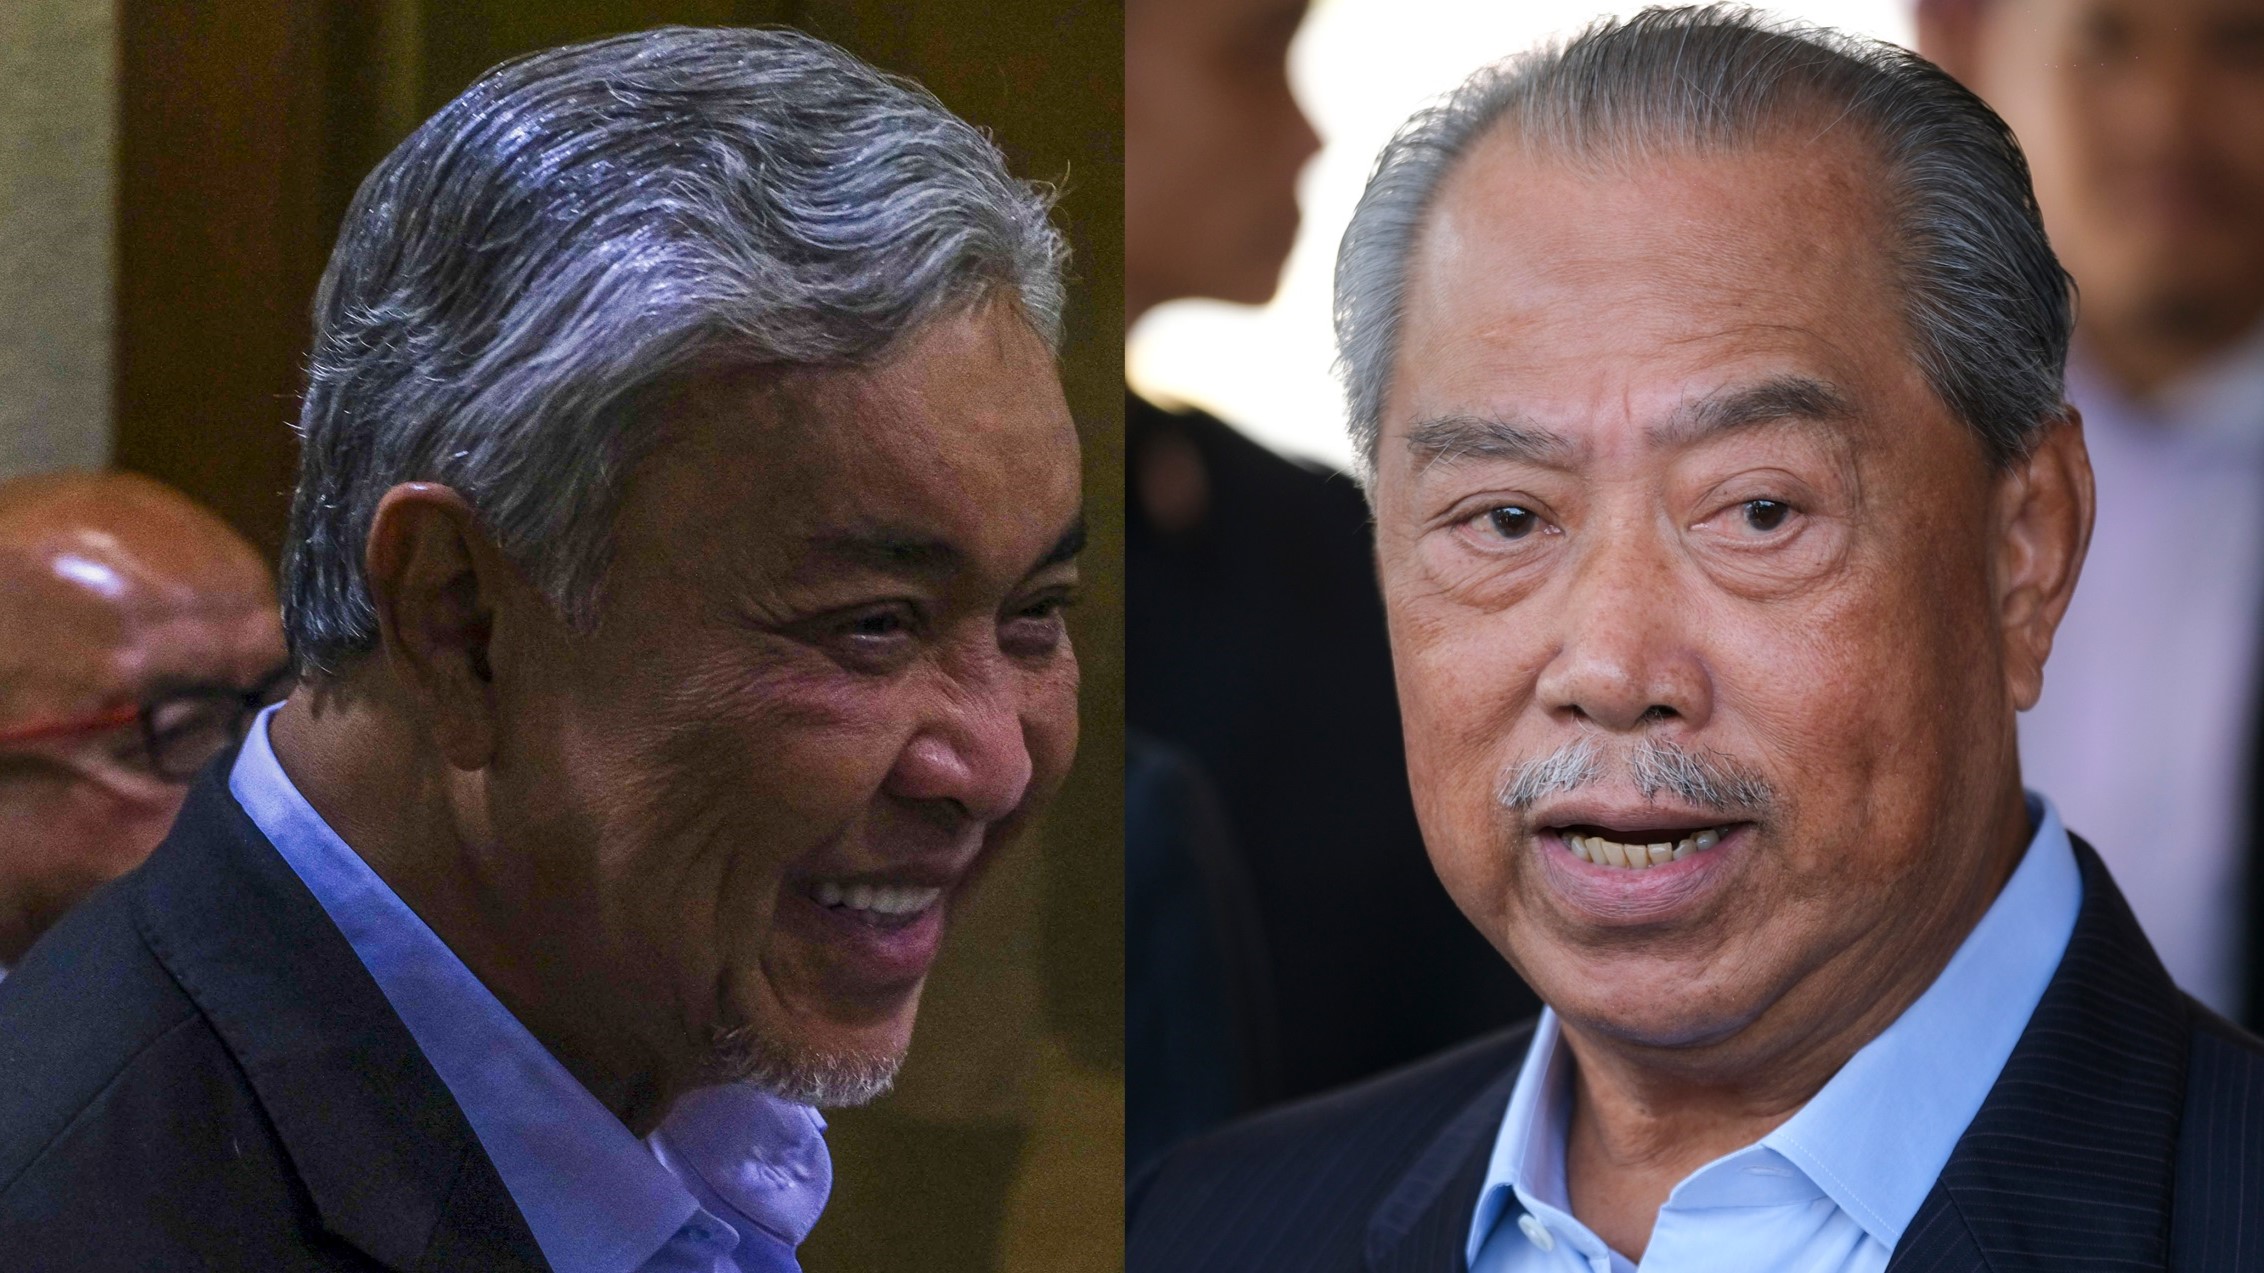 [UPDATED] Zahid and Muhyiddin bury the hatchet ‘for rakyat's wellbeing’